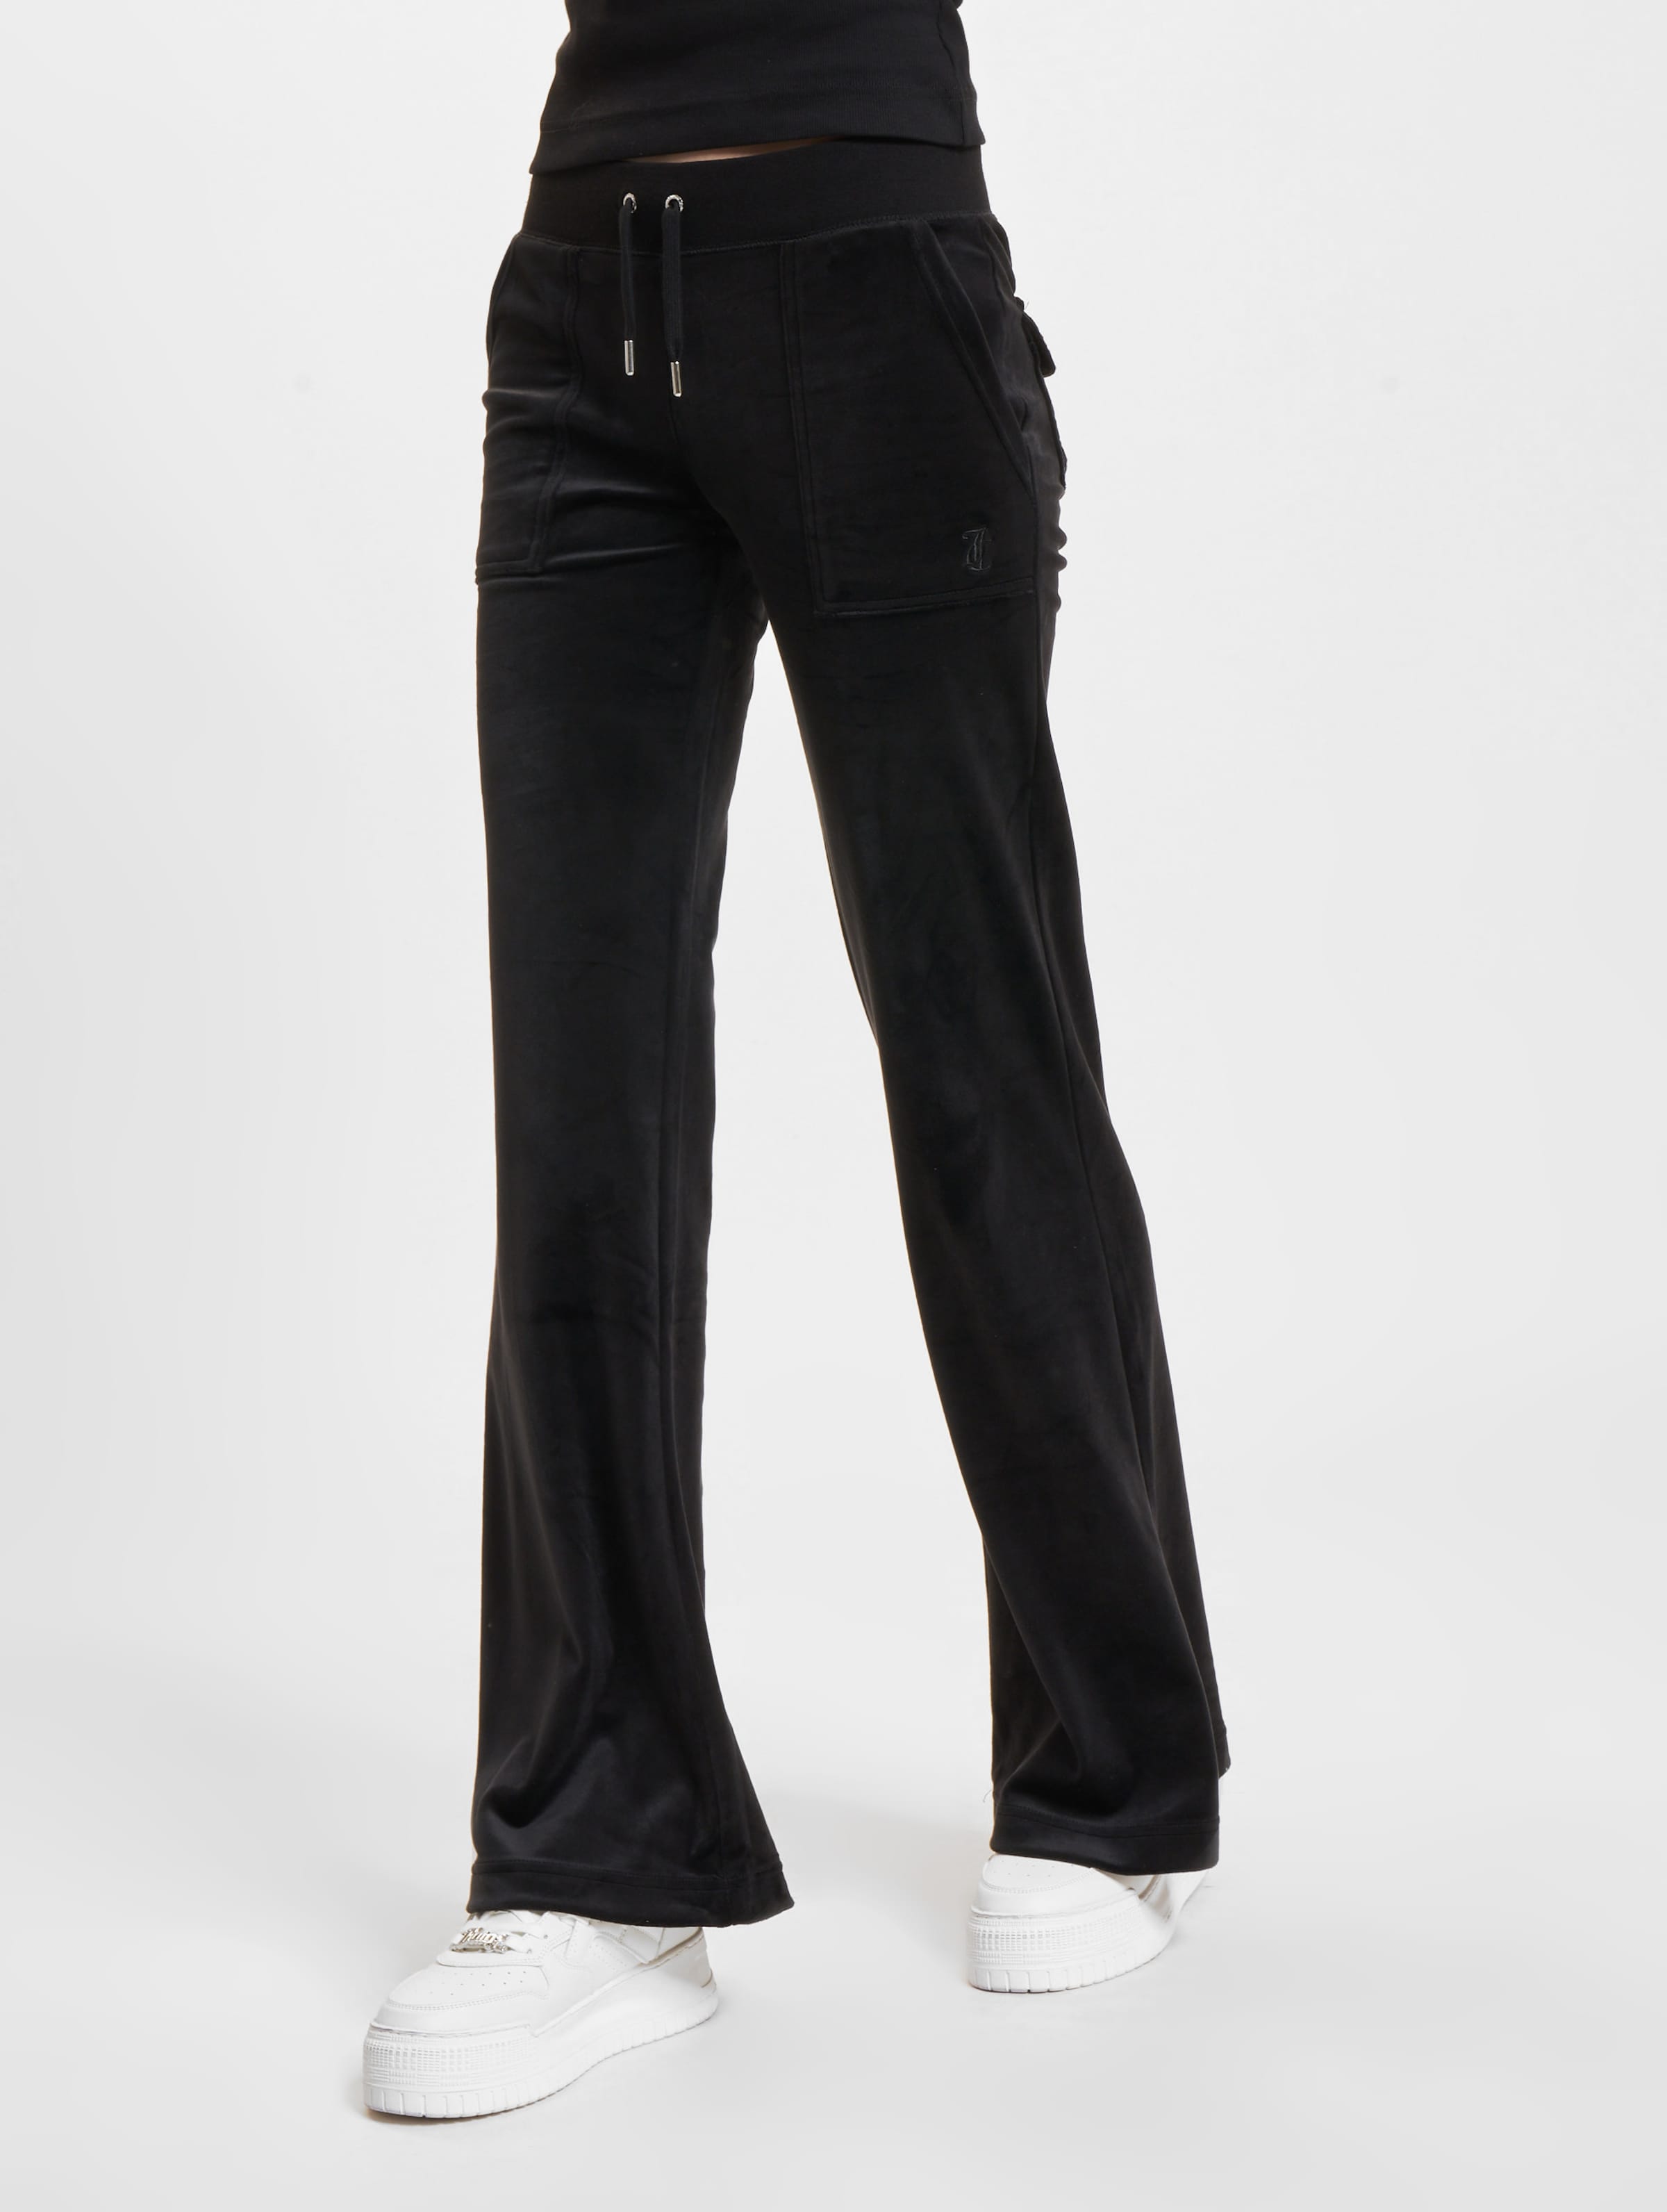 Juicy Couture Layla Pocket Low Rise Jogginghose Frauen,Unisex op kleur zwart, Maat S